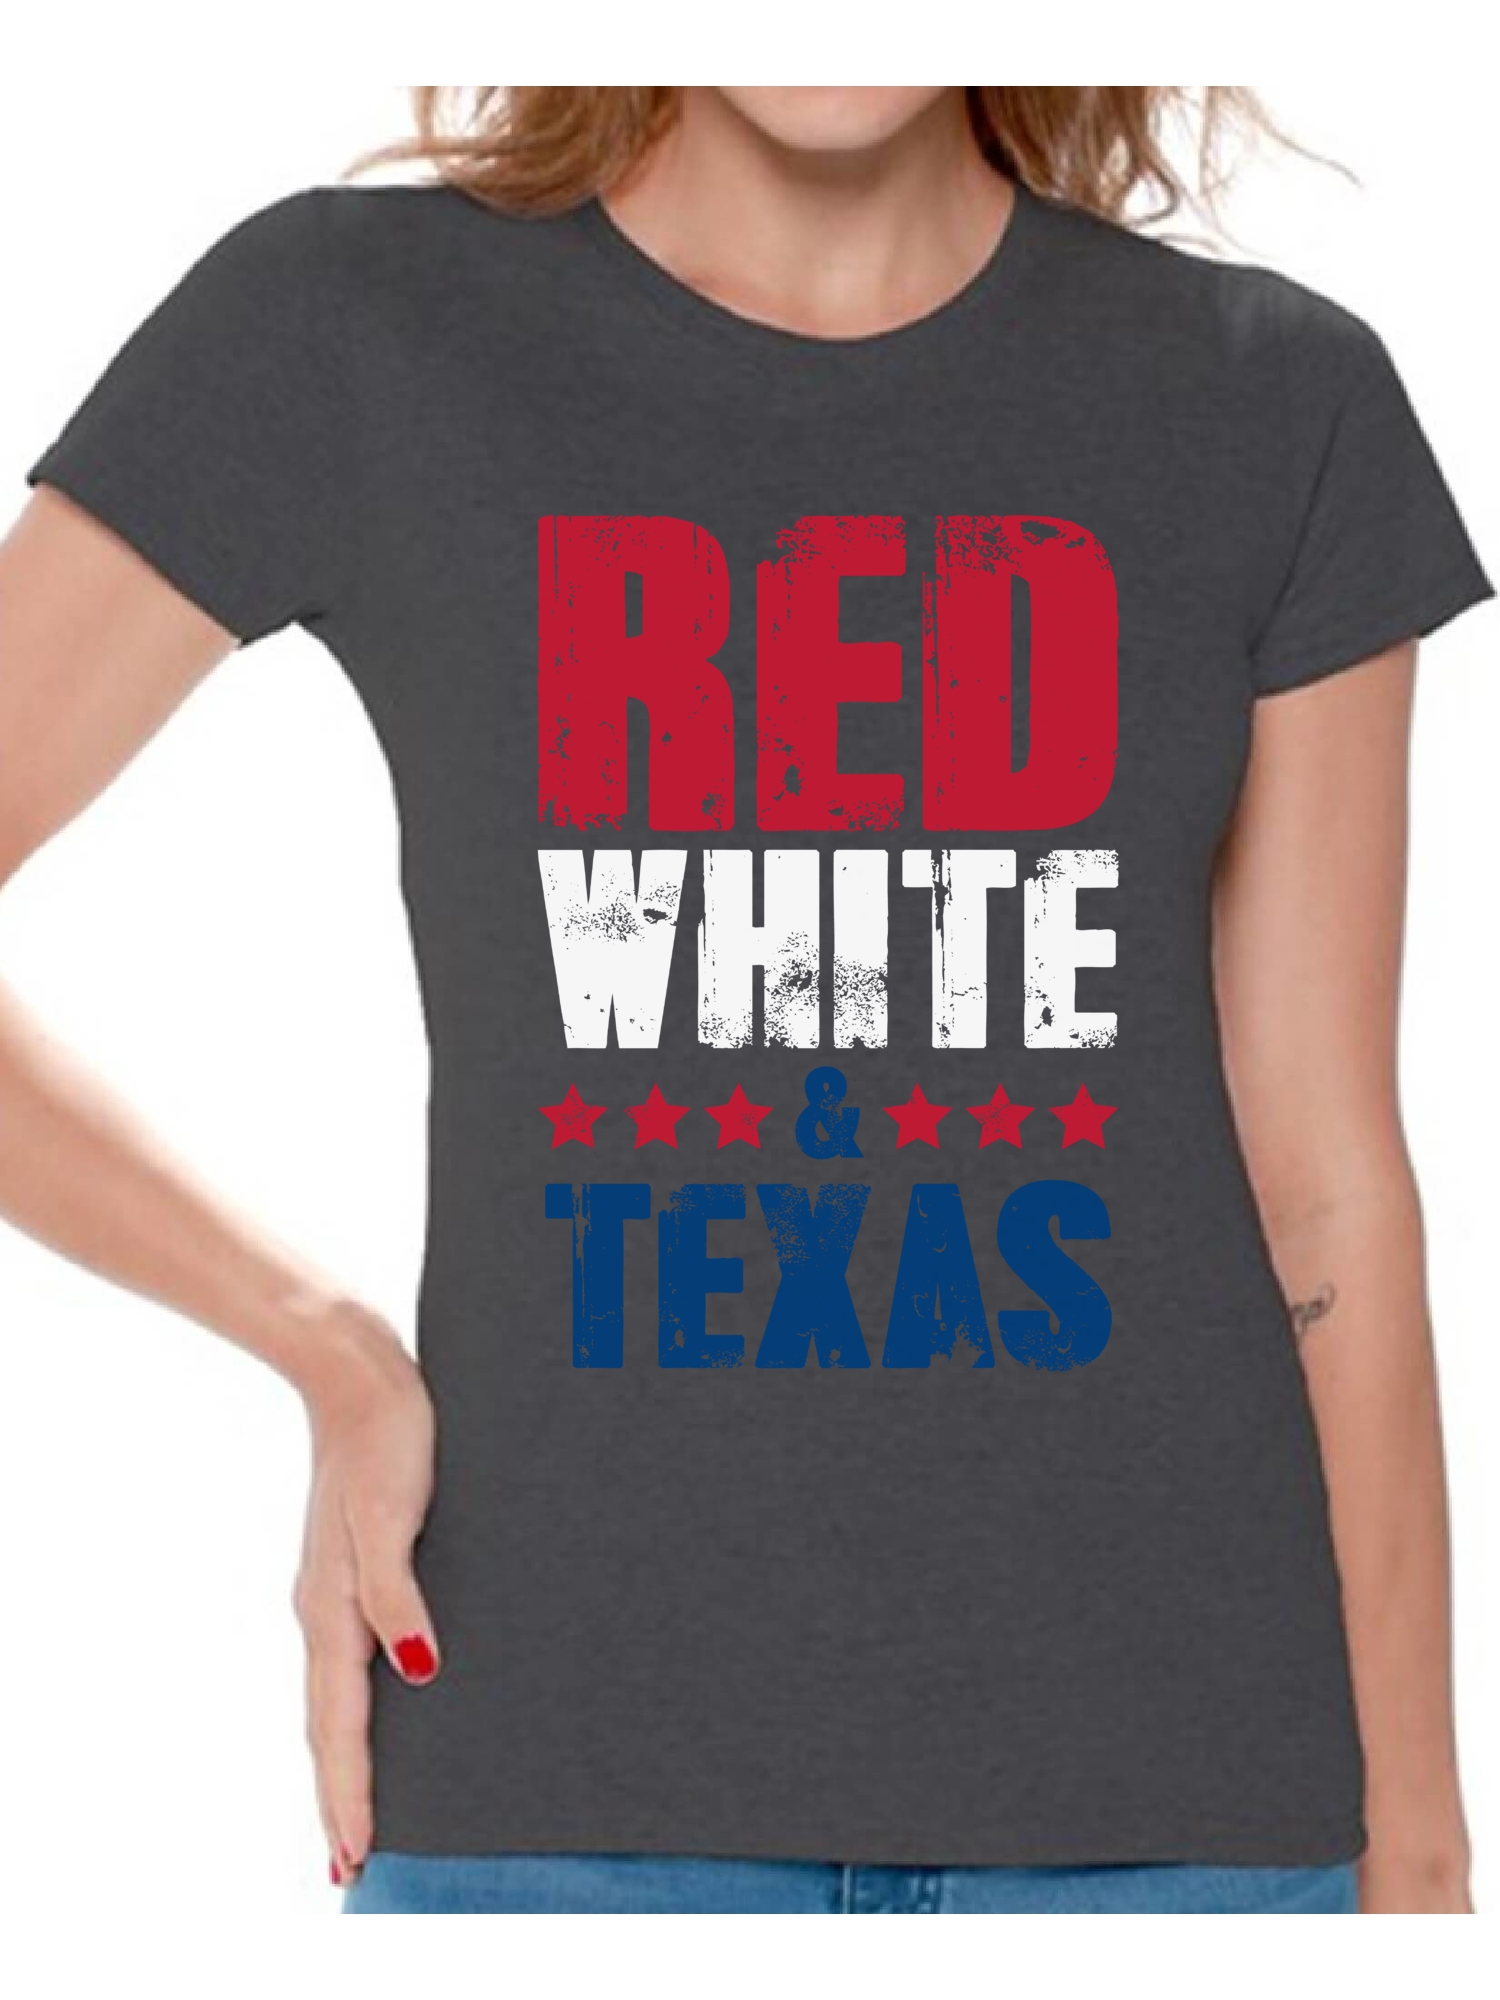 Awkward Styles Red White & Texas Shirt for Women American Women USA Flag Shirts Texas Tshirt 4th of July Shirts for Women Patriots Tshirt Gifts from Texas USA Shirts for Women USA Women's Shirt - image 1 of 4